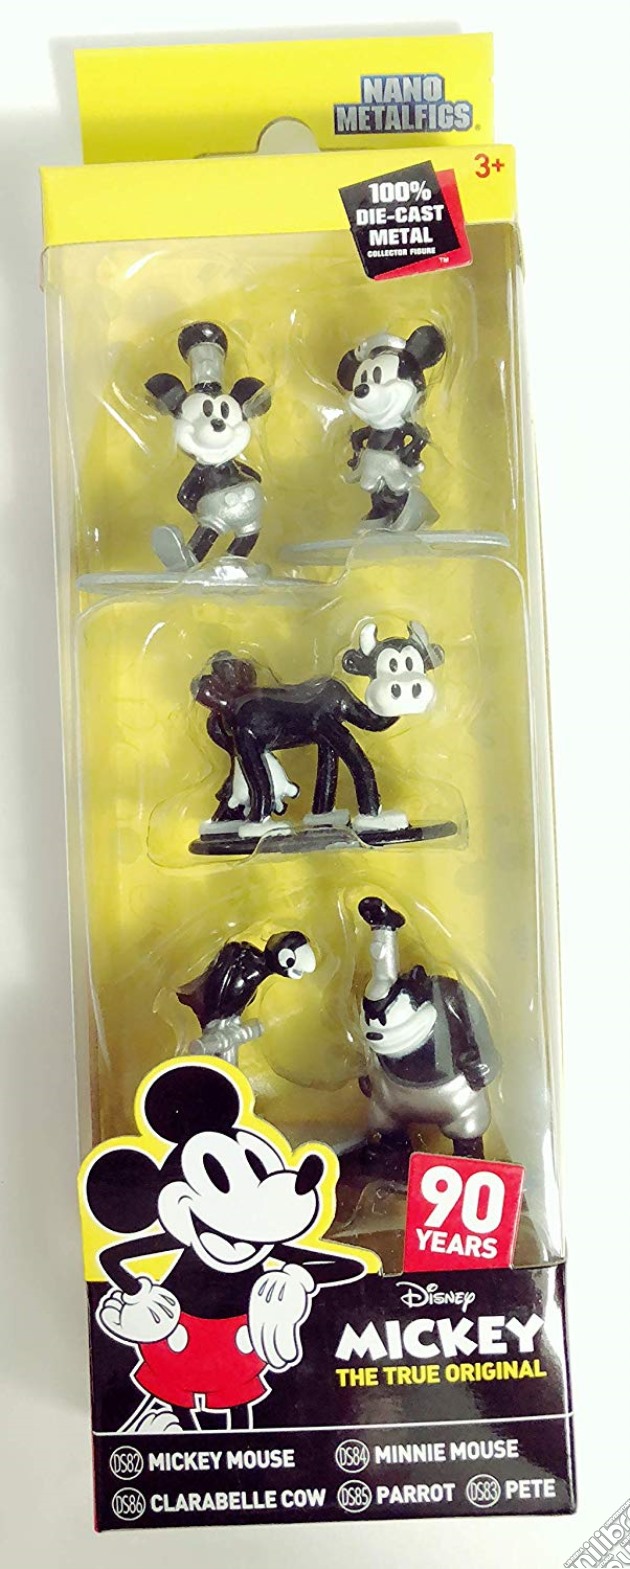 Disney Nano Metalfigs Mickey Mouse Diecast Figure 5 Pack gioco